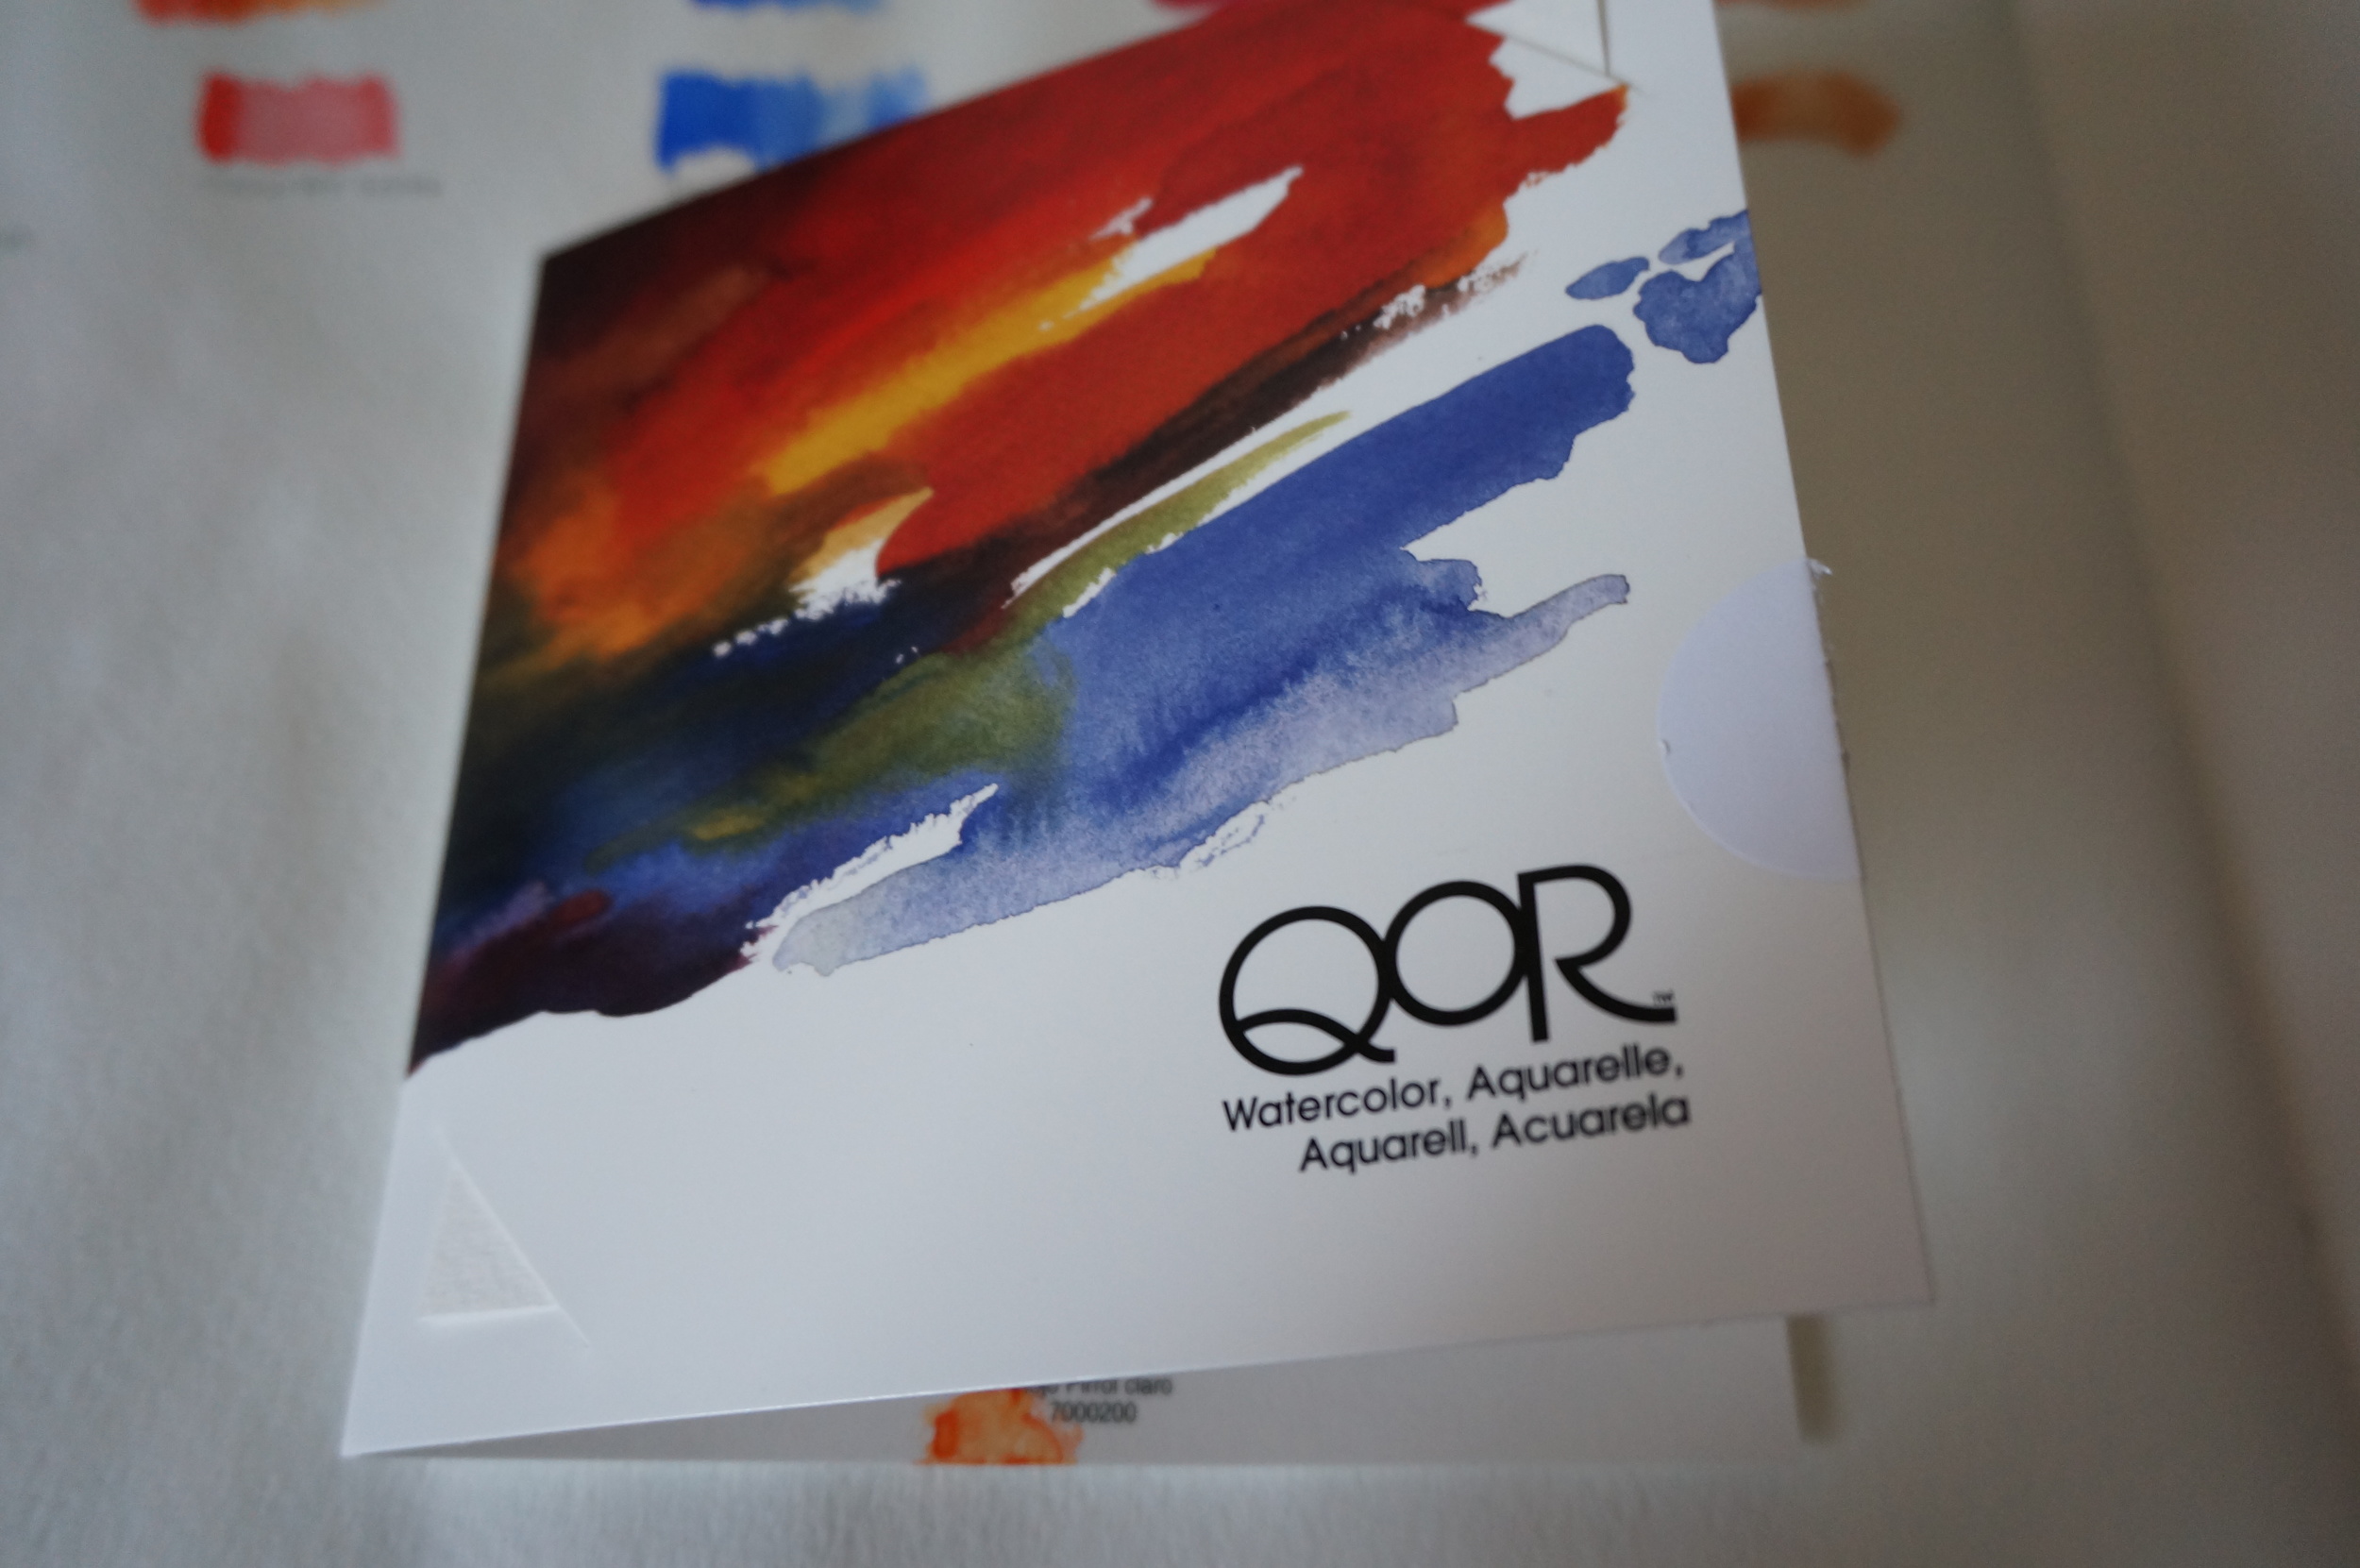 Qor Watercolors Review